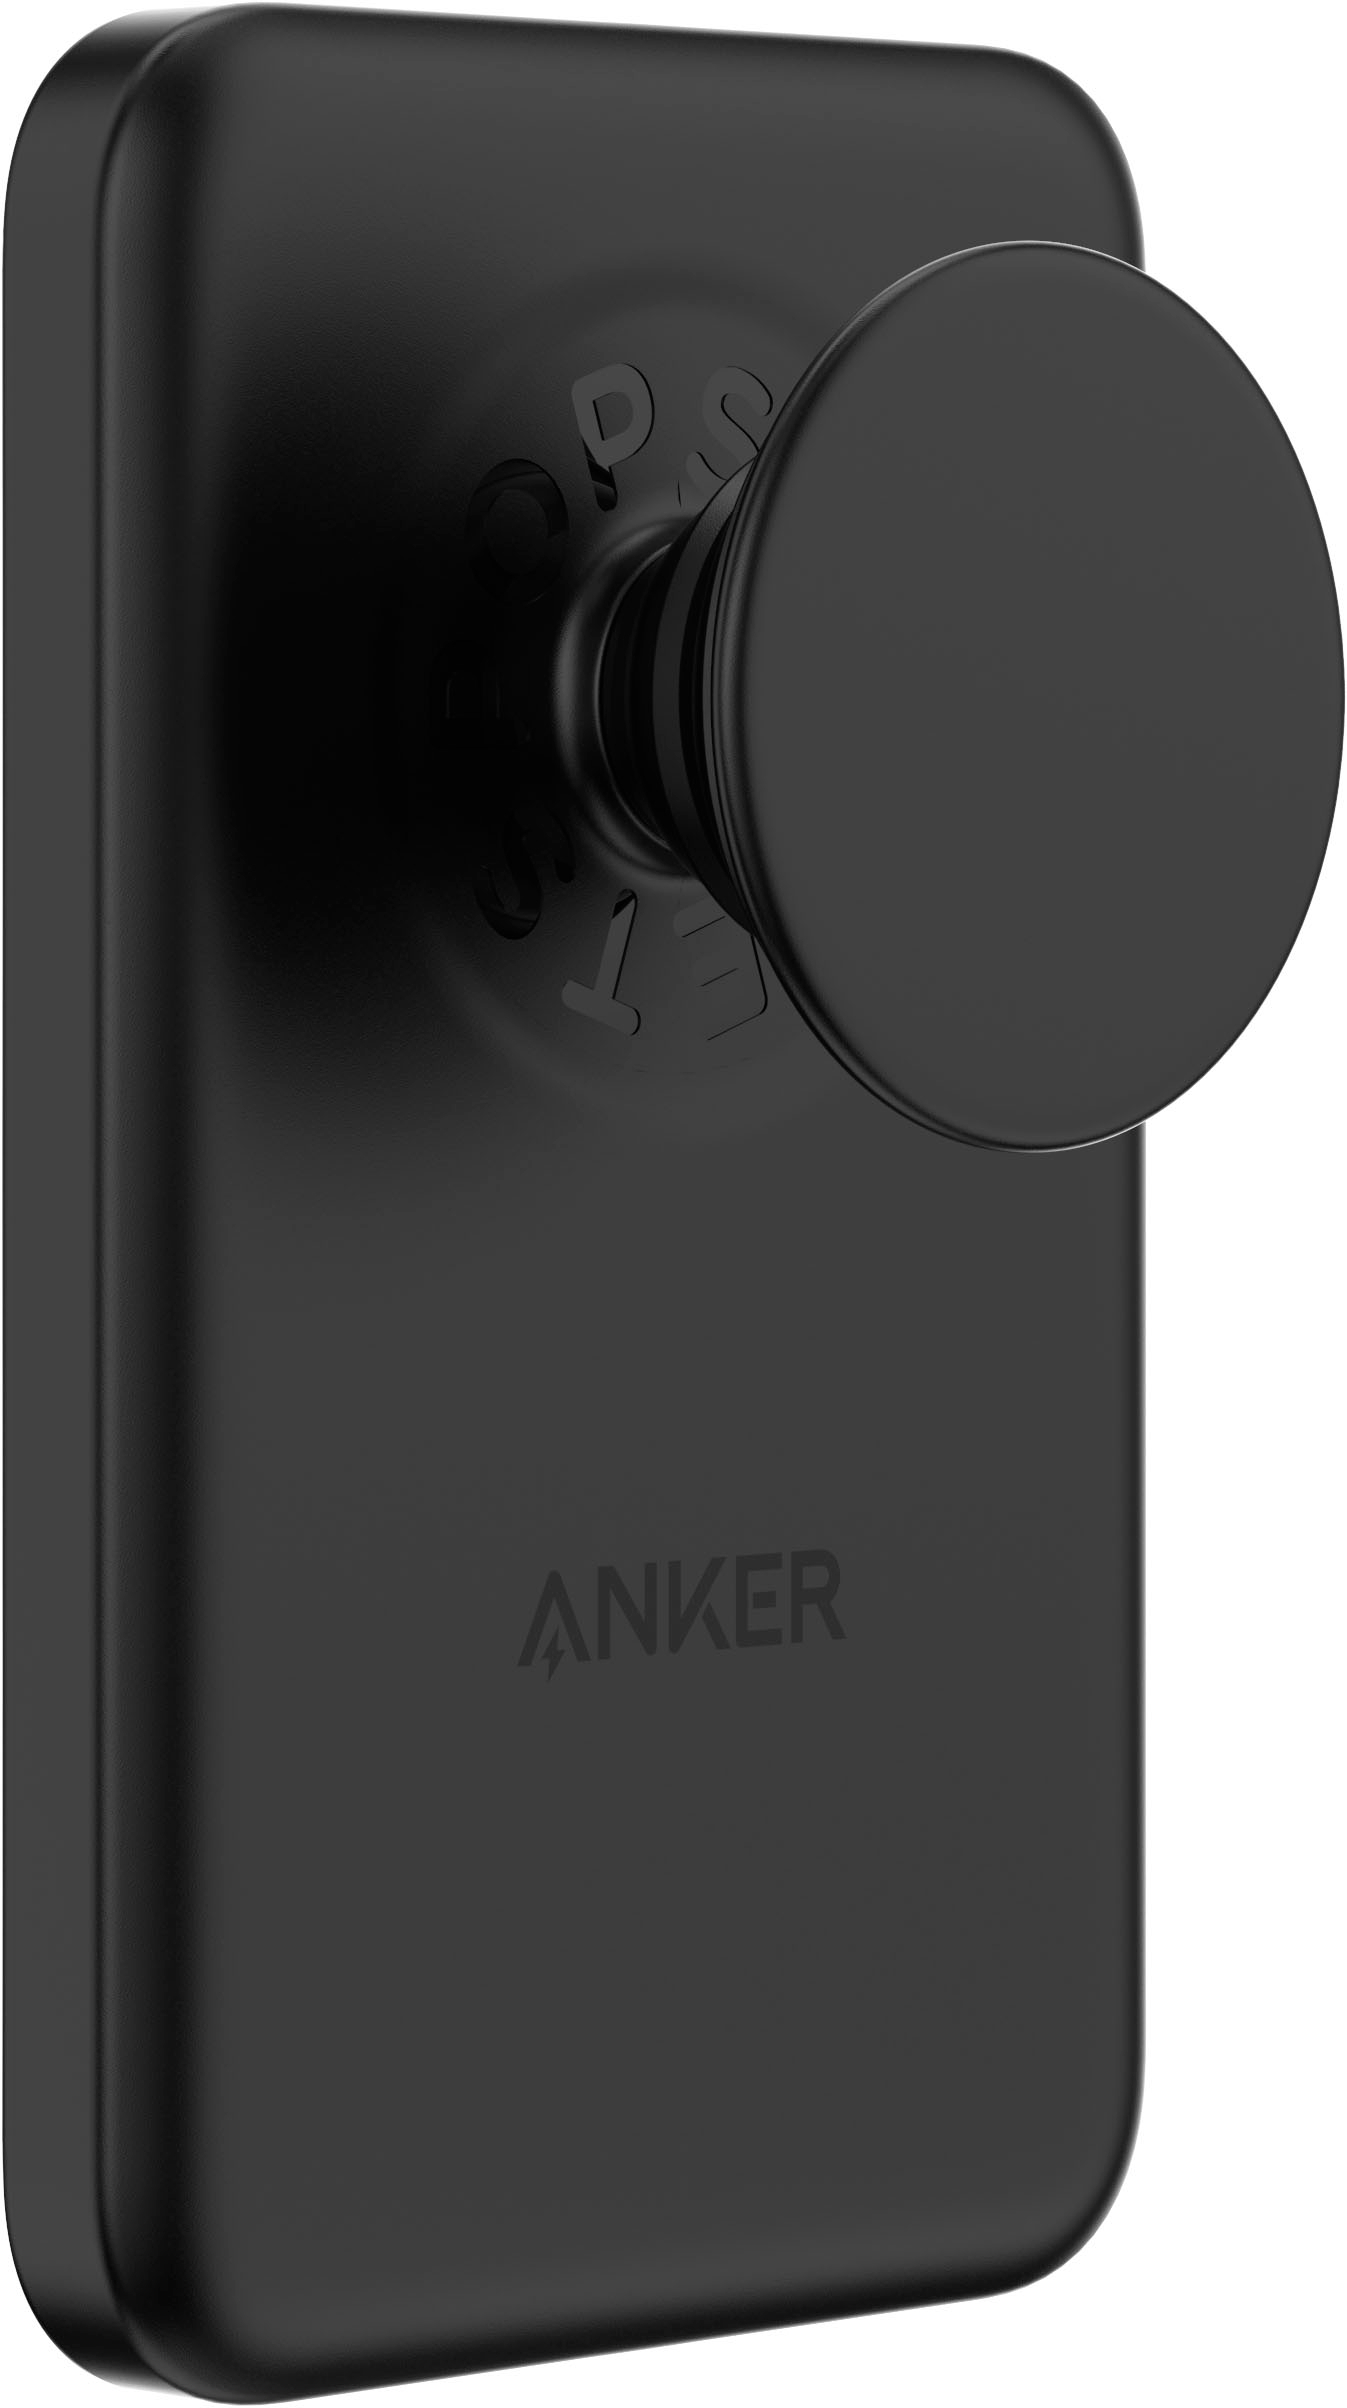 PopSockets x Anker MagGo 5000 mAh Portable Magnetic Battery